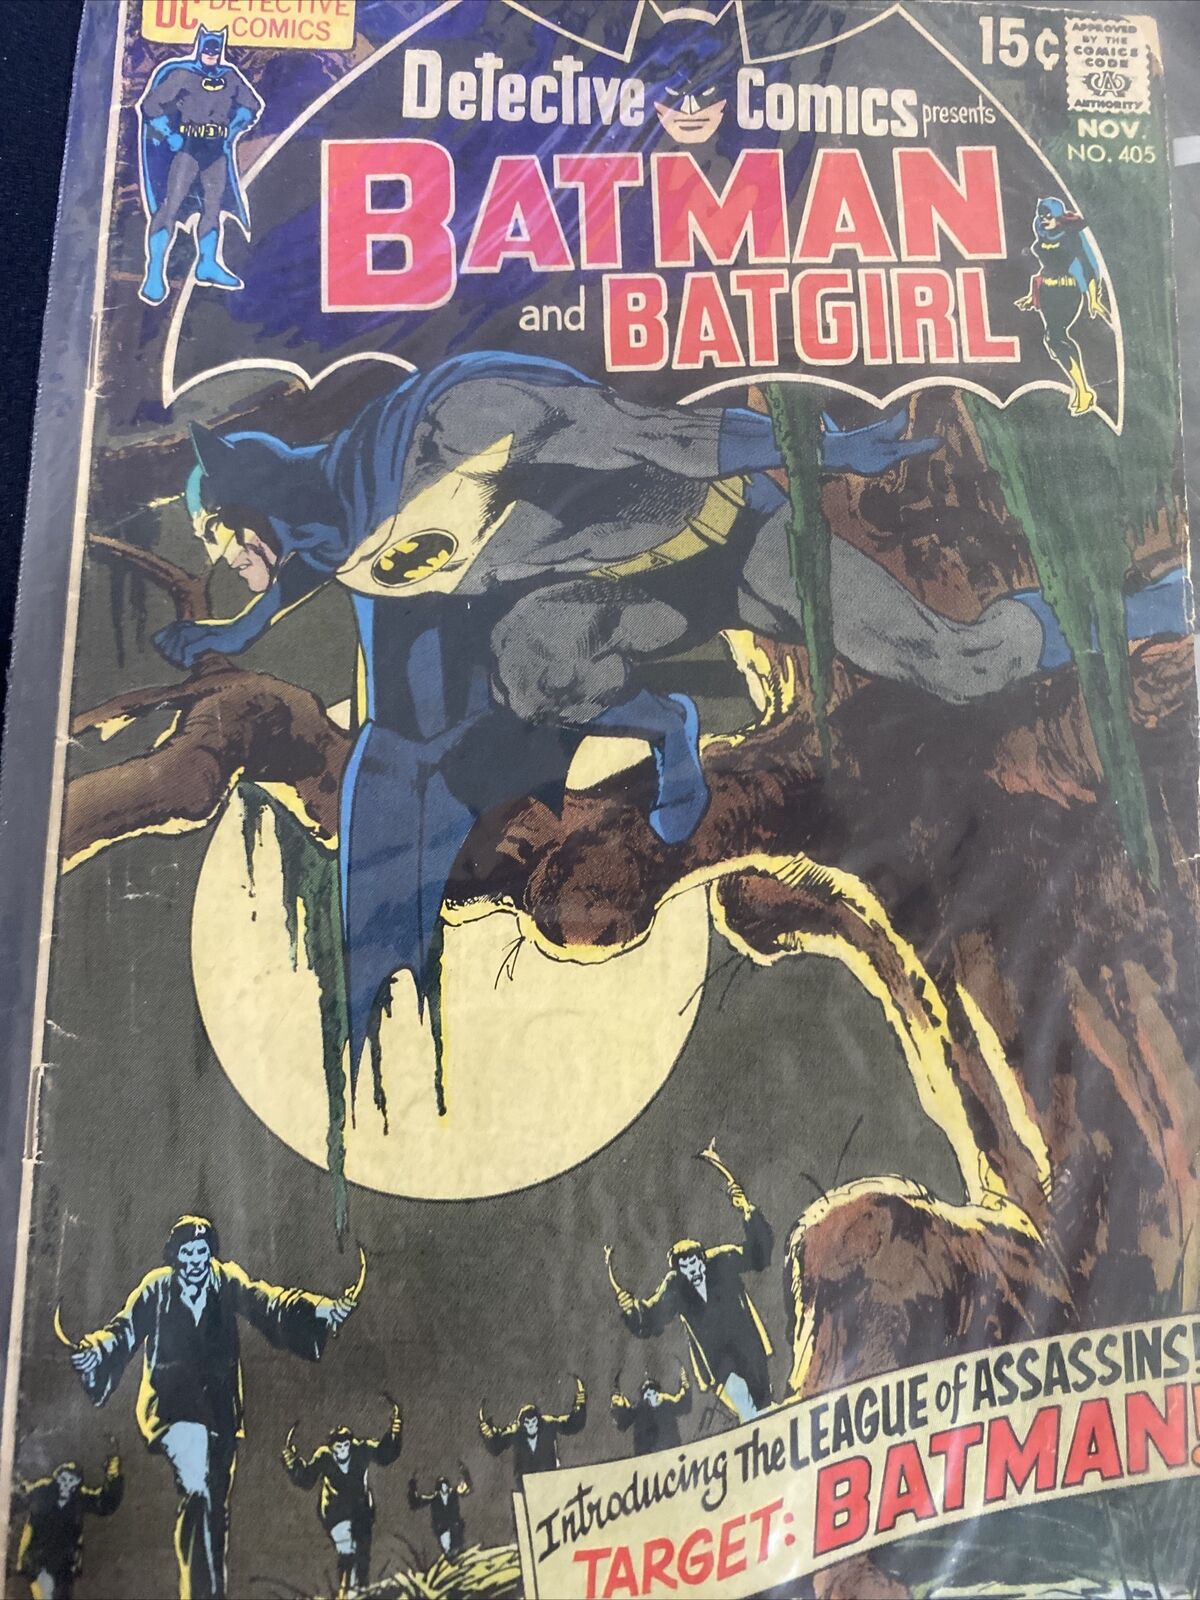 Batman And Batgirl # 405 Introducing The League Of Assassins